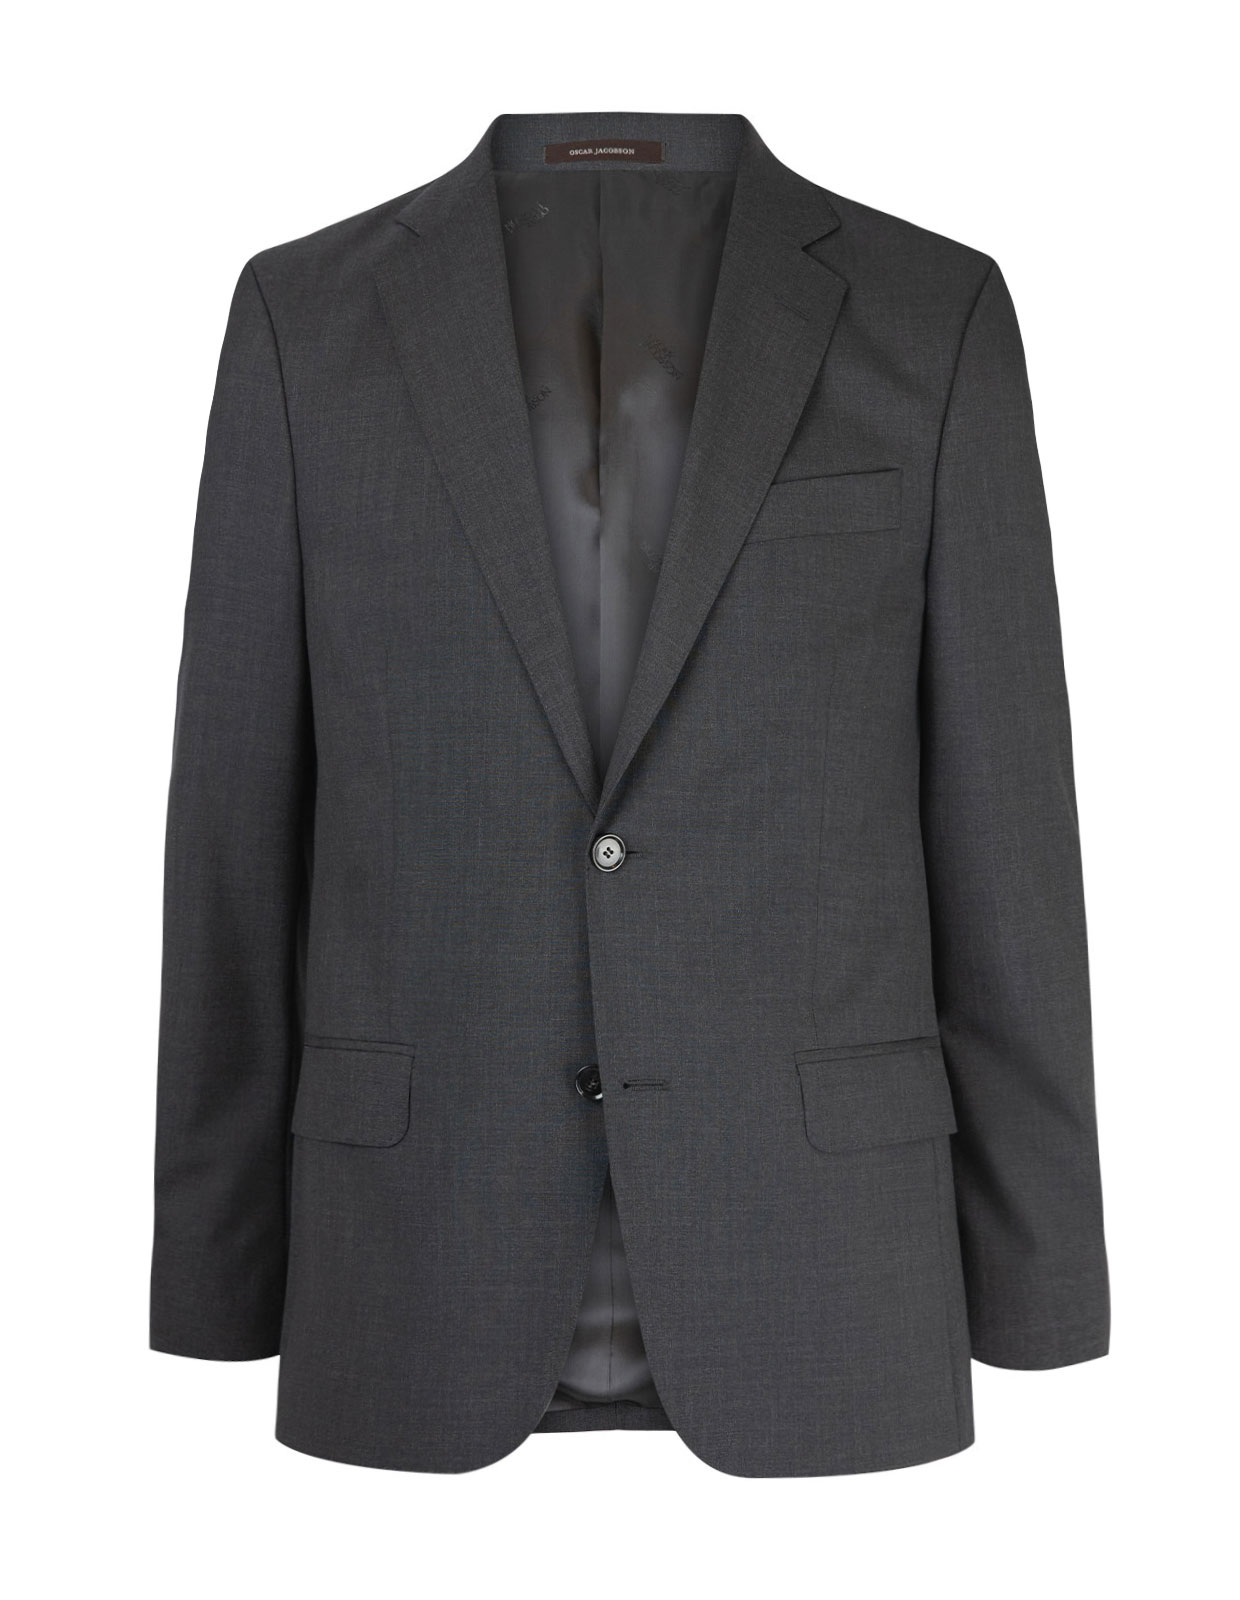 Falk Suit Jacket Regular Fit Mix & Match Wool Dark Grey Stl D108